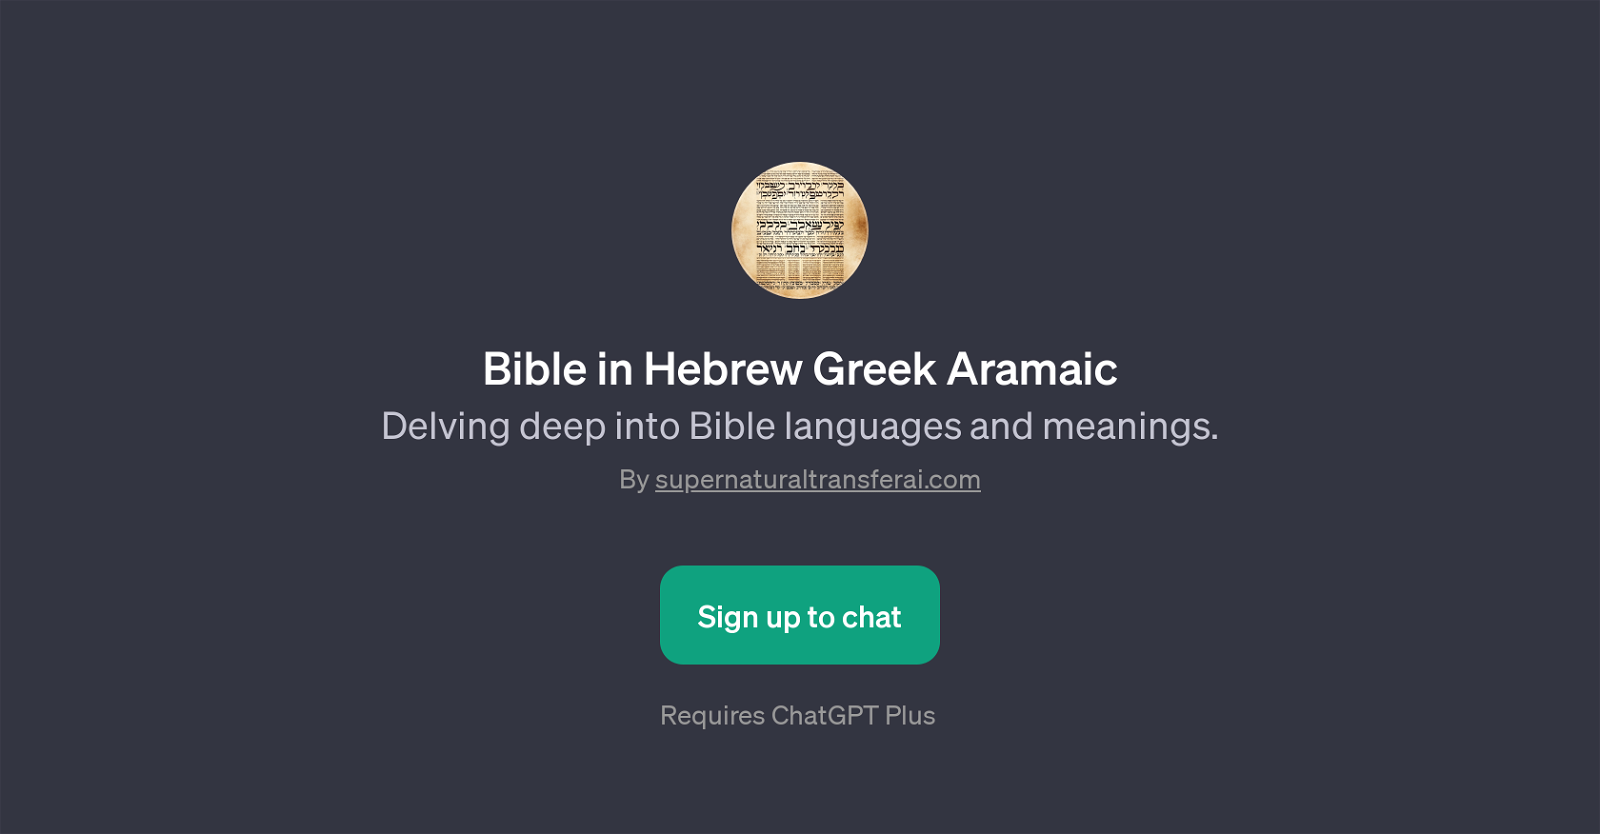 Bible in Hebrew Greek Aramaic website